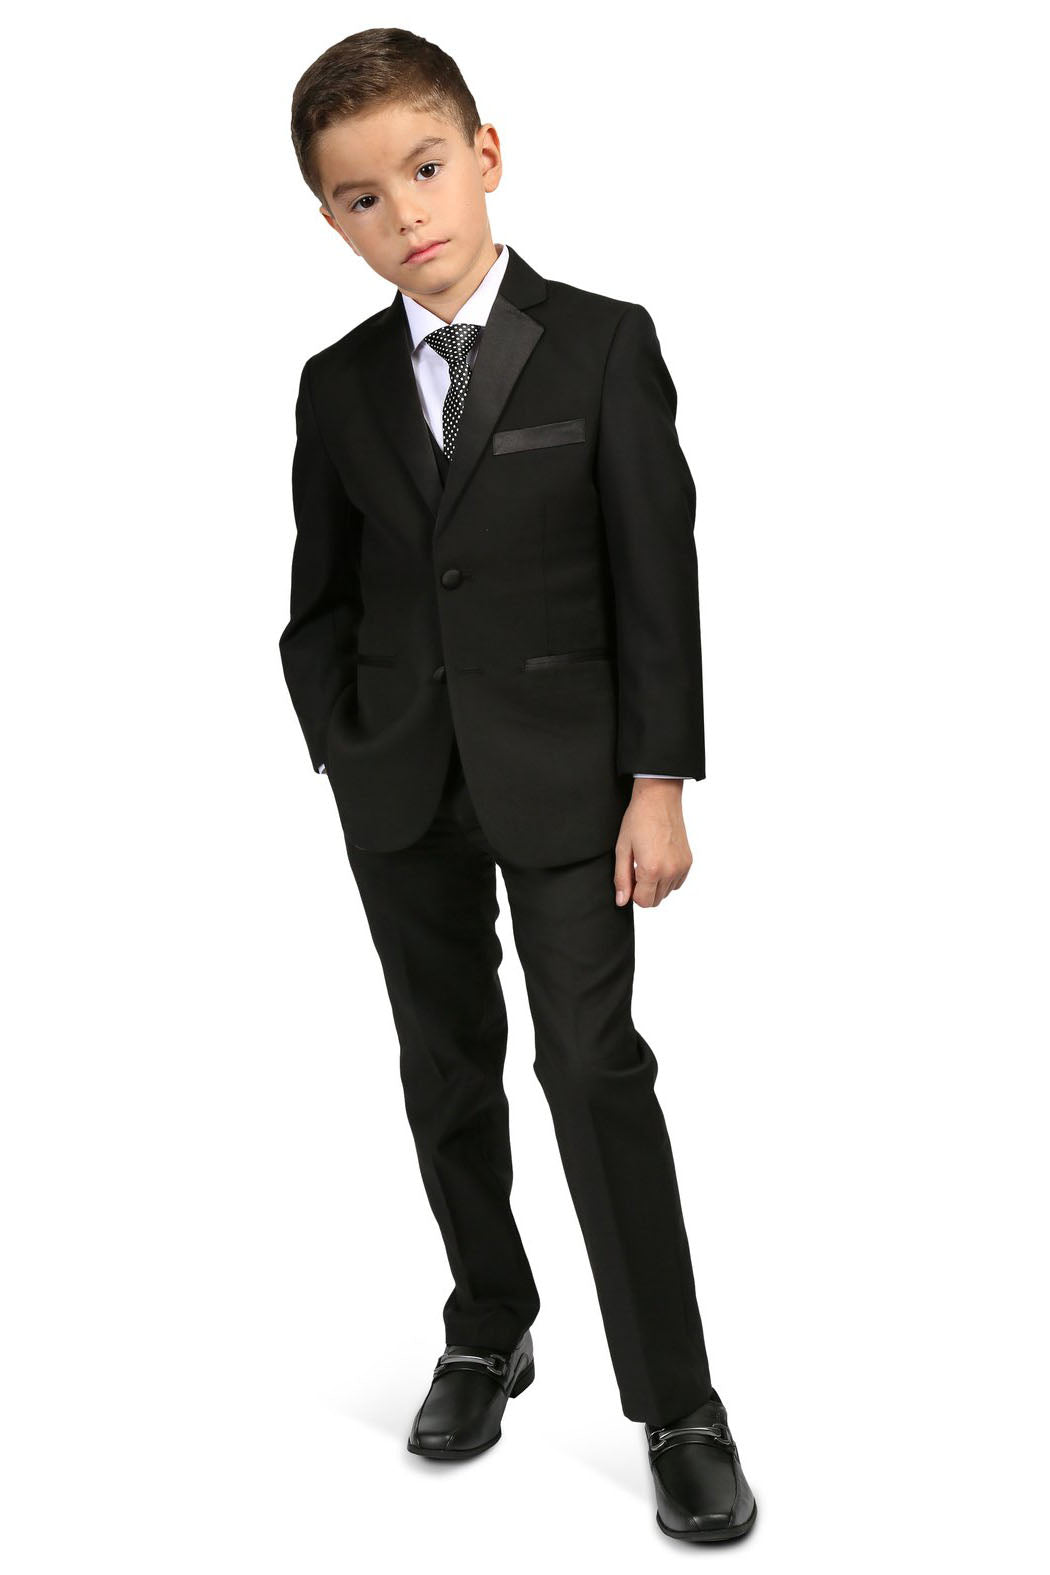 Amazon.com: optkeat Three Piece Boys Tuxedo Suit Toddler Suit for Boys  Wedding Outfit Kids Tuxedo Jacket Pants Vest Set (Beige,6T): Clothing,  Shoes & Jewelry